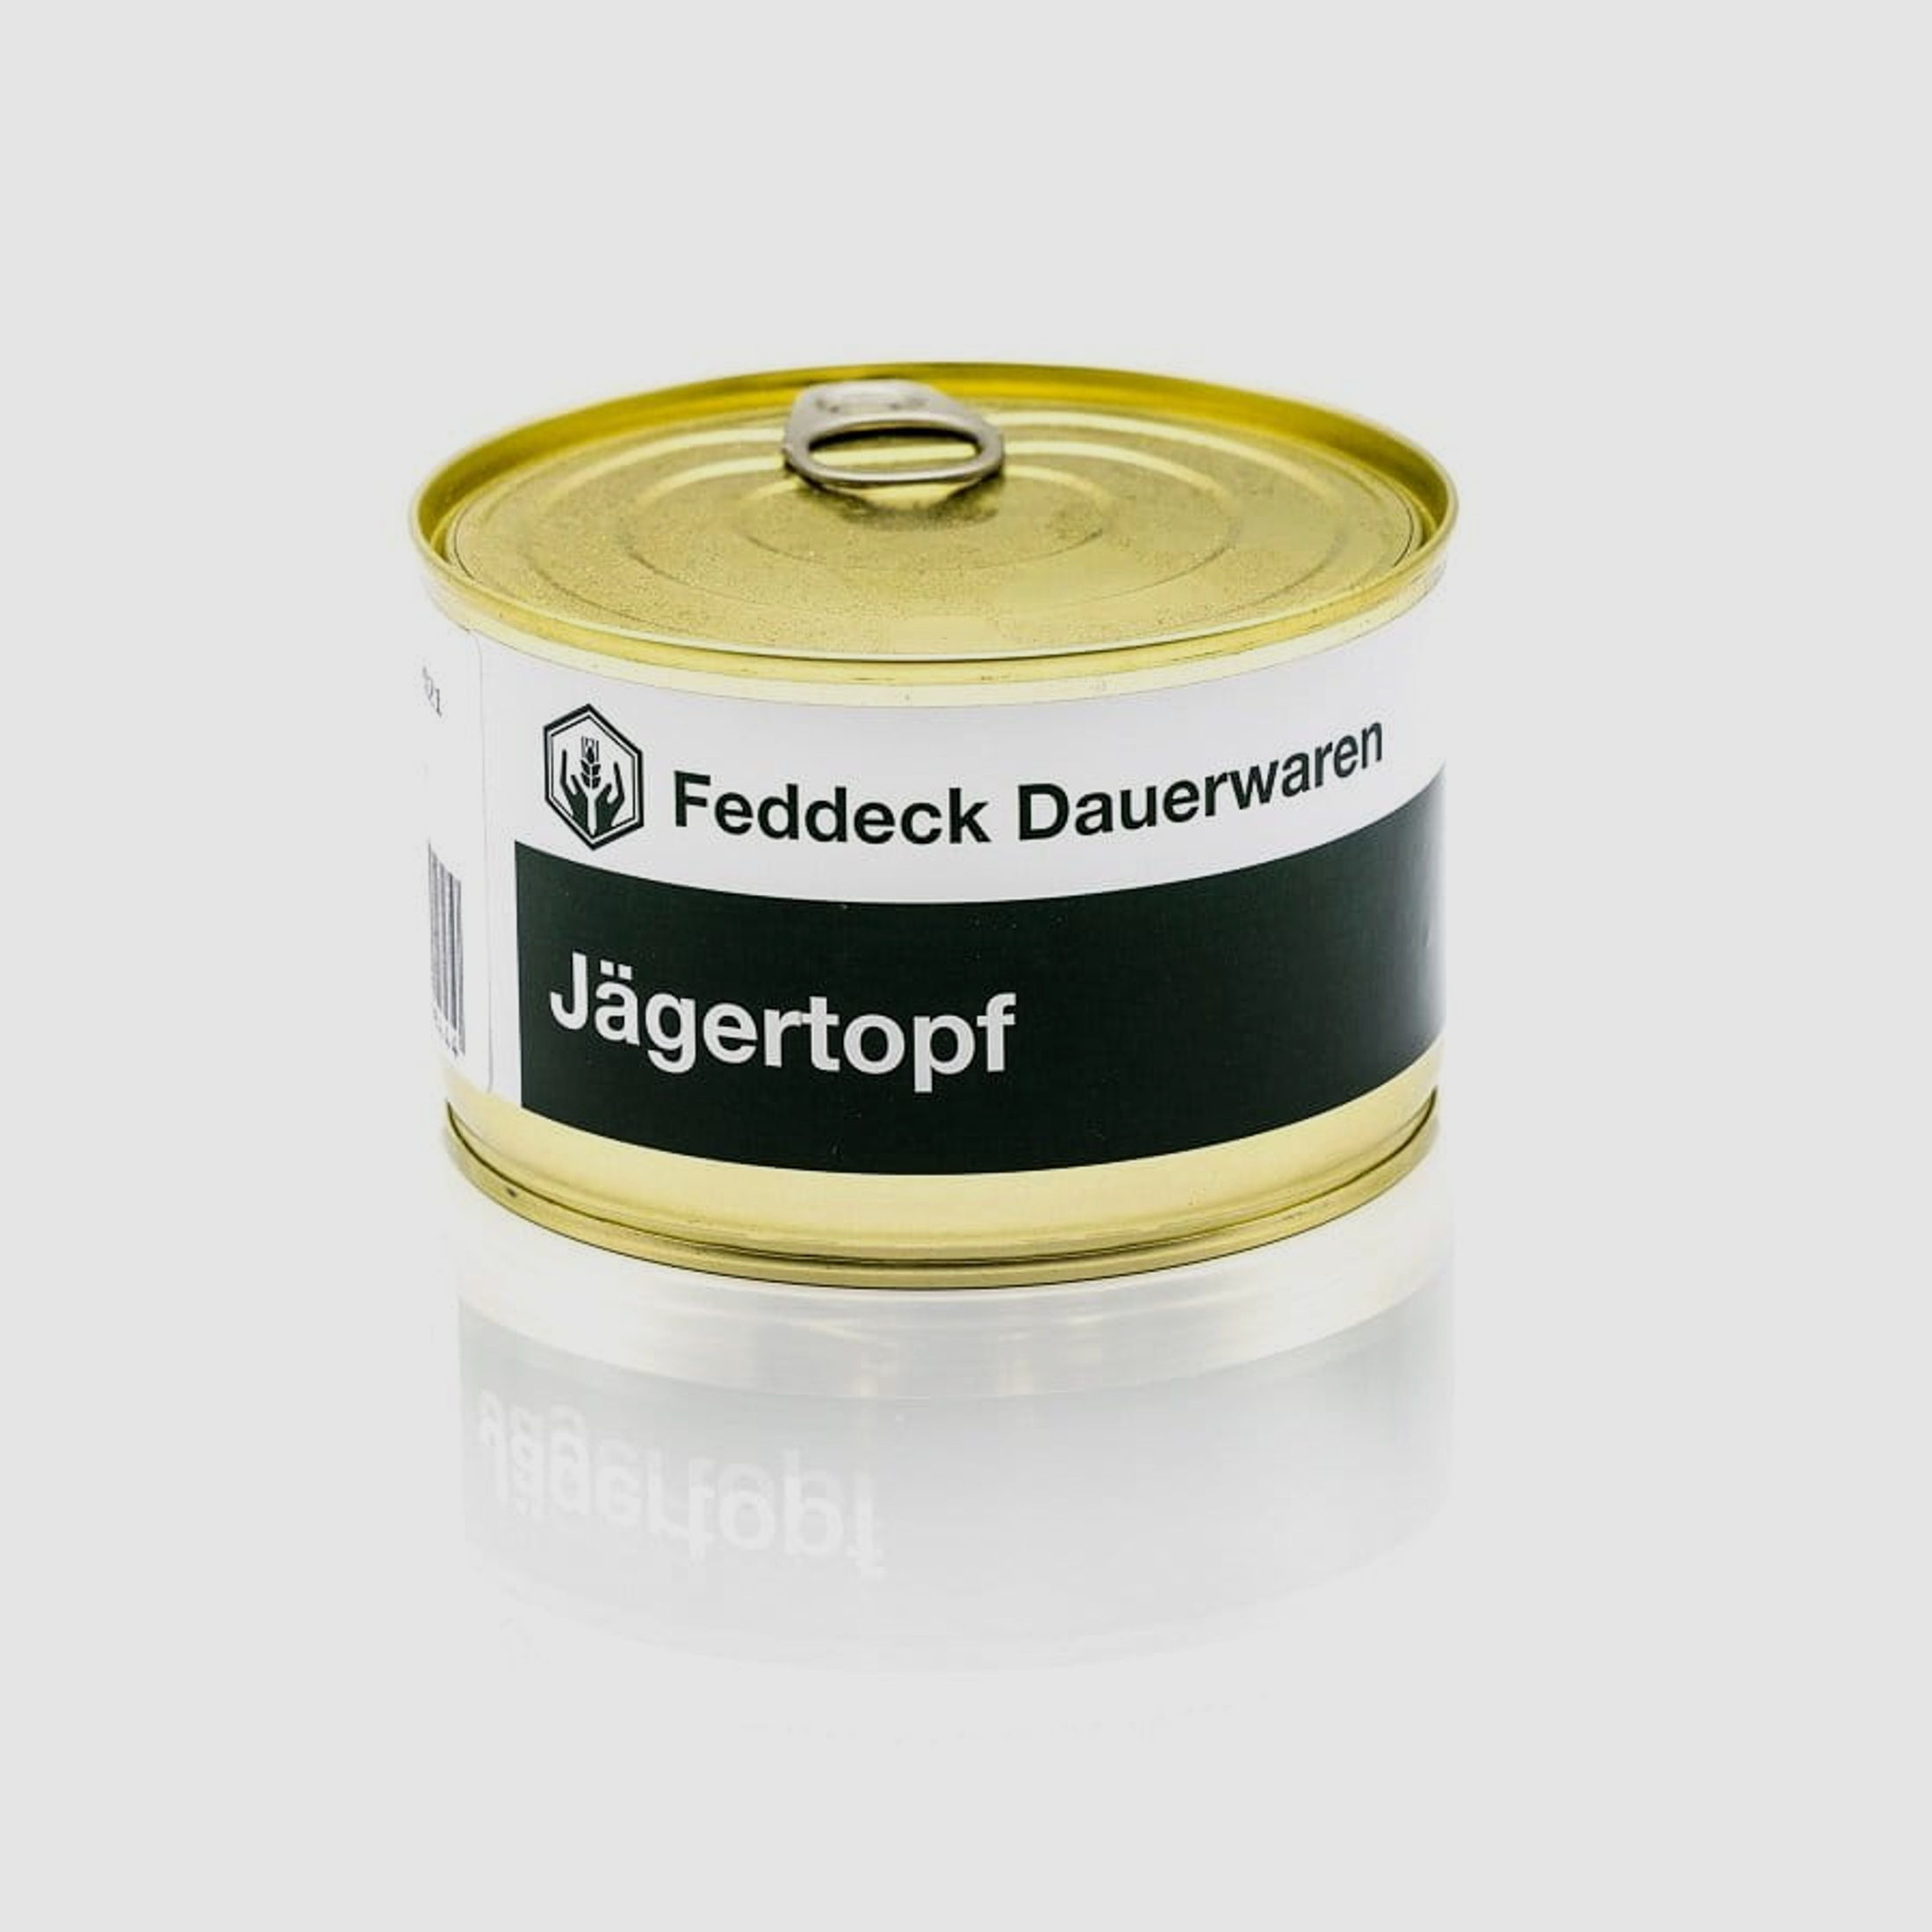 Feddeck Dauerwaren Jägertopf (400 g)